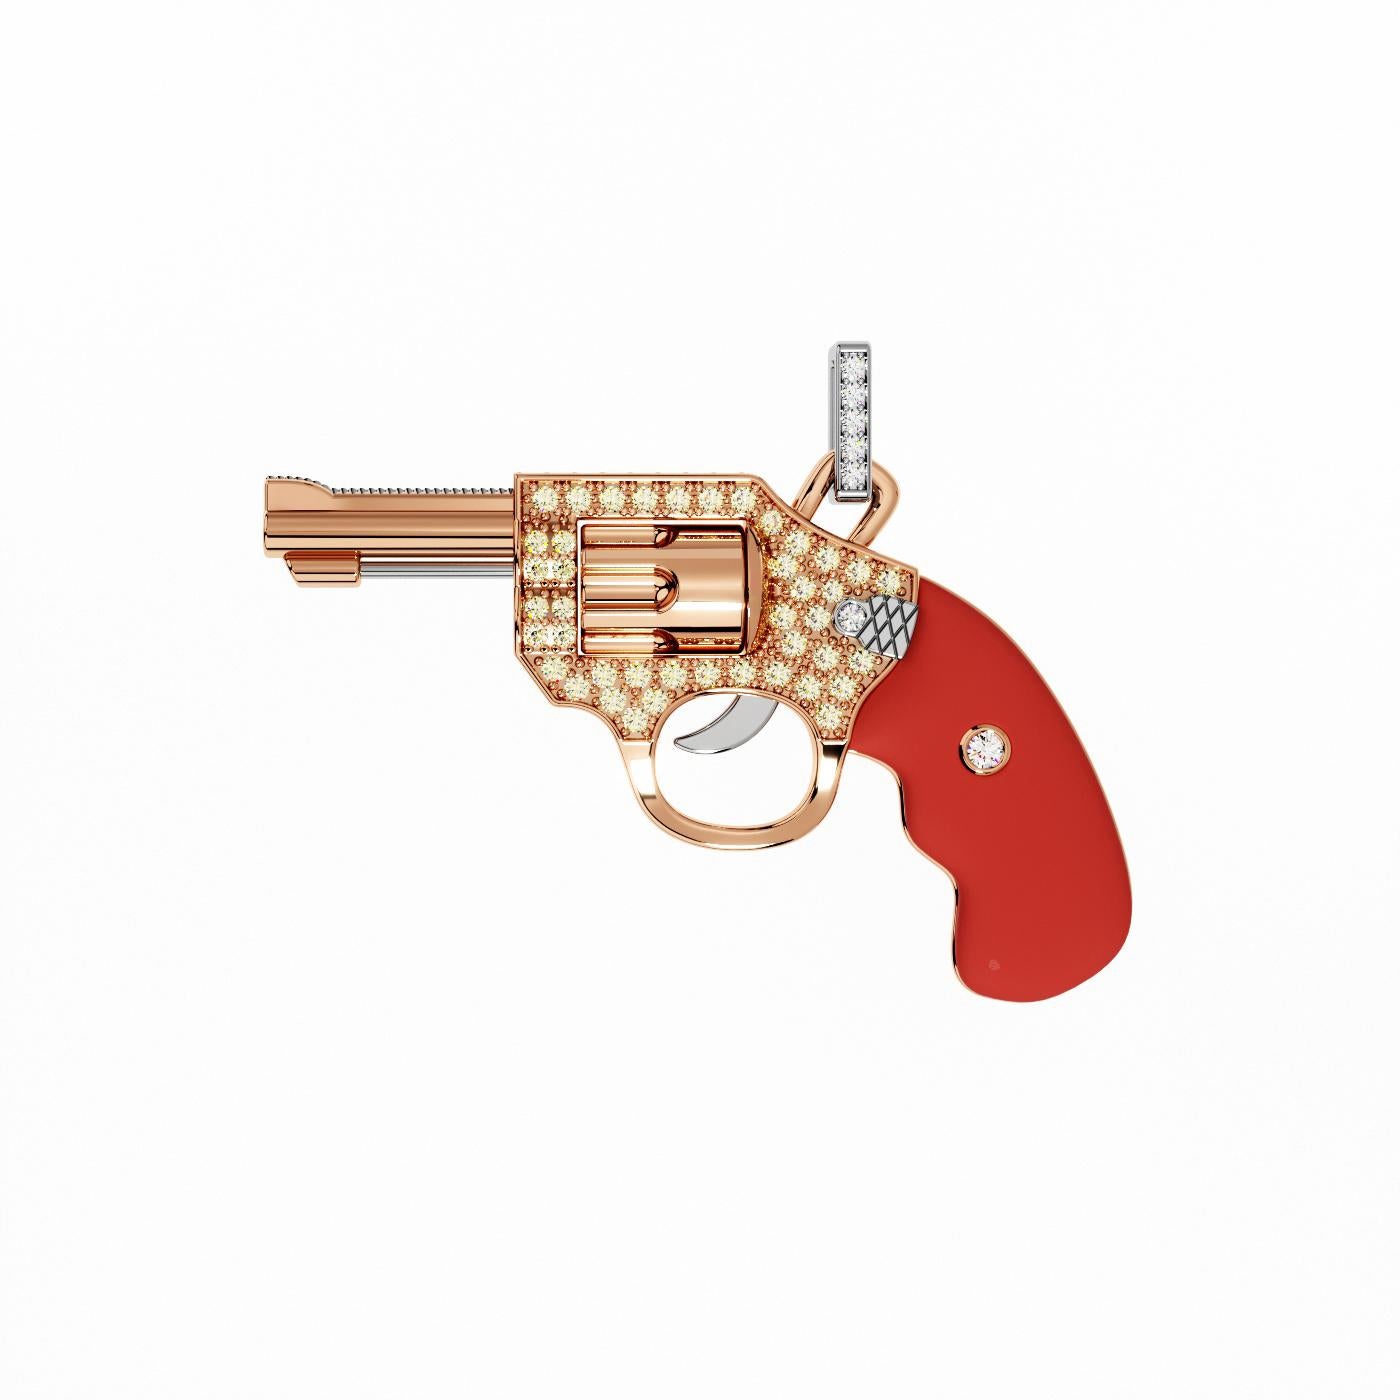 Diamond Gun Revolver Red Carnelian Gem 18 Karat Rose Gold Necklace Pendant Charm
18 Karat Gold
Genuine Carnelian Stone & Natural Diamonds 0.50 CTW
Approximate Mini Peacemaker Length: 1.3” inches / 3.3 centimeters
Approximate Chain Length: Adjustable